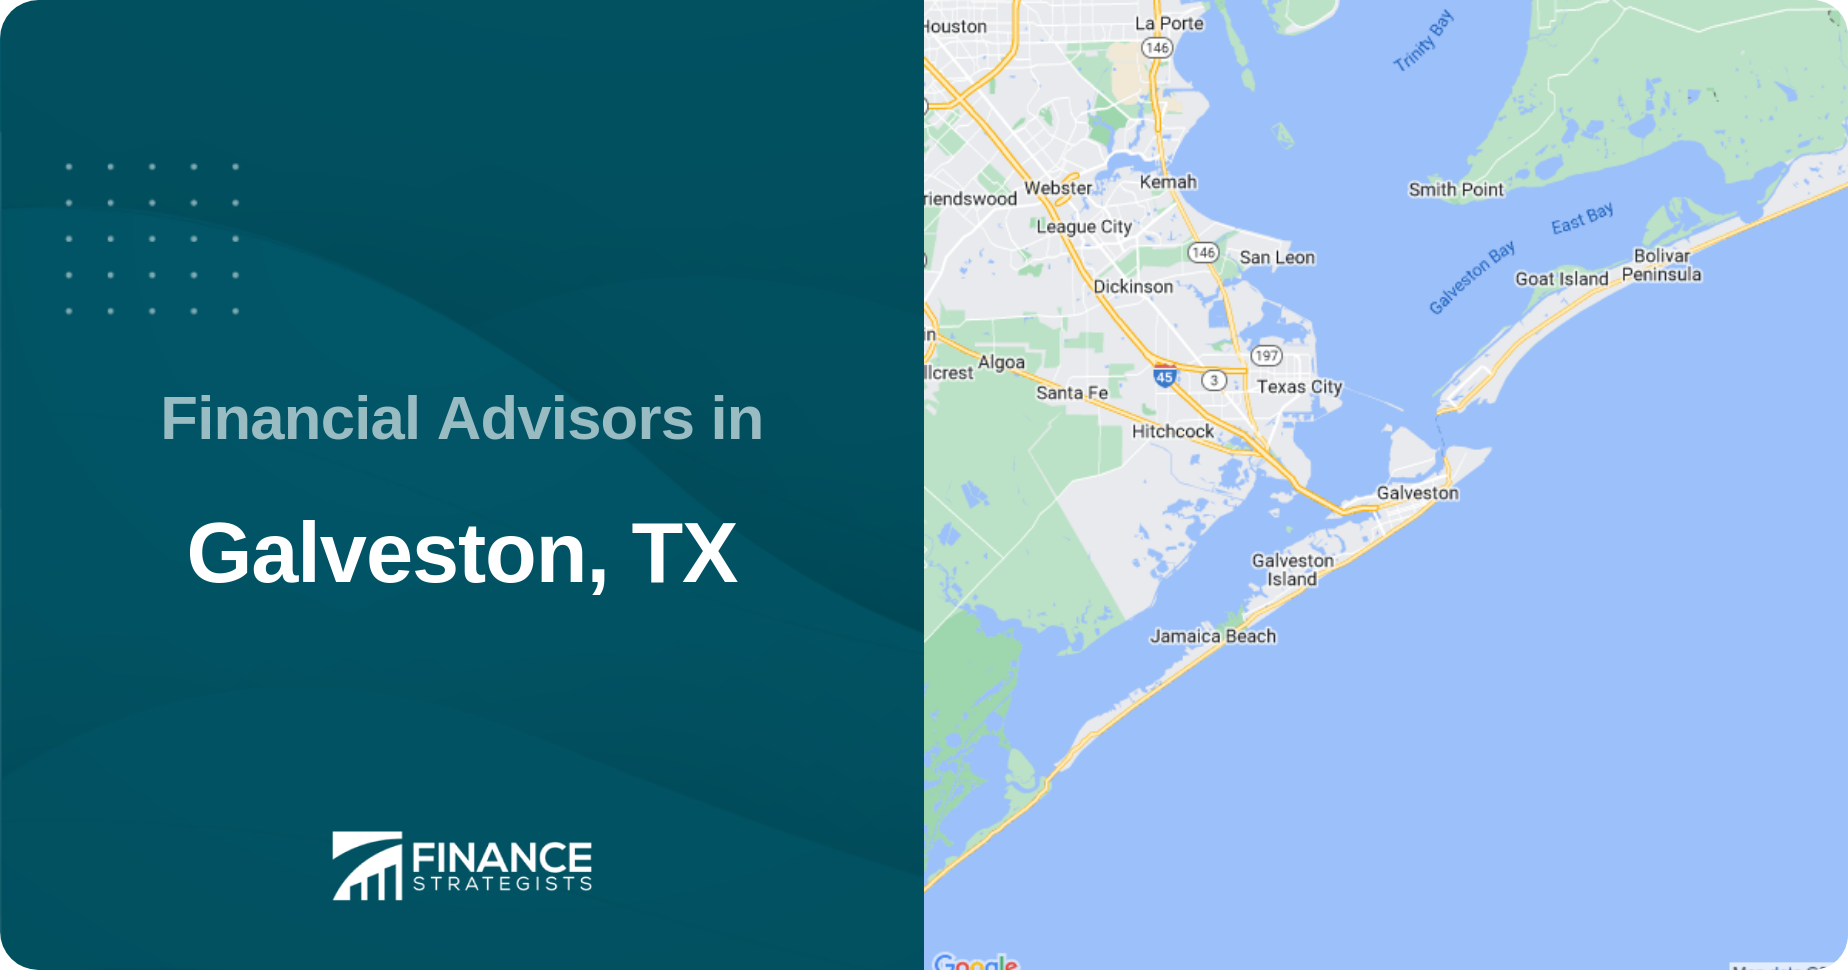 Financial Advisors in Galveston, TX